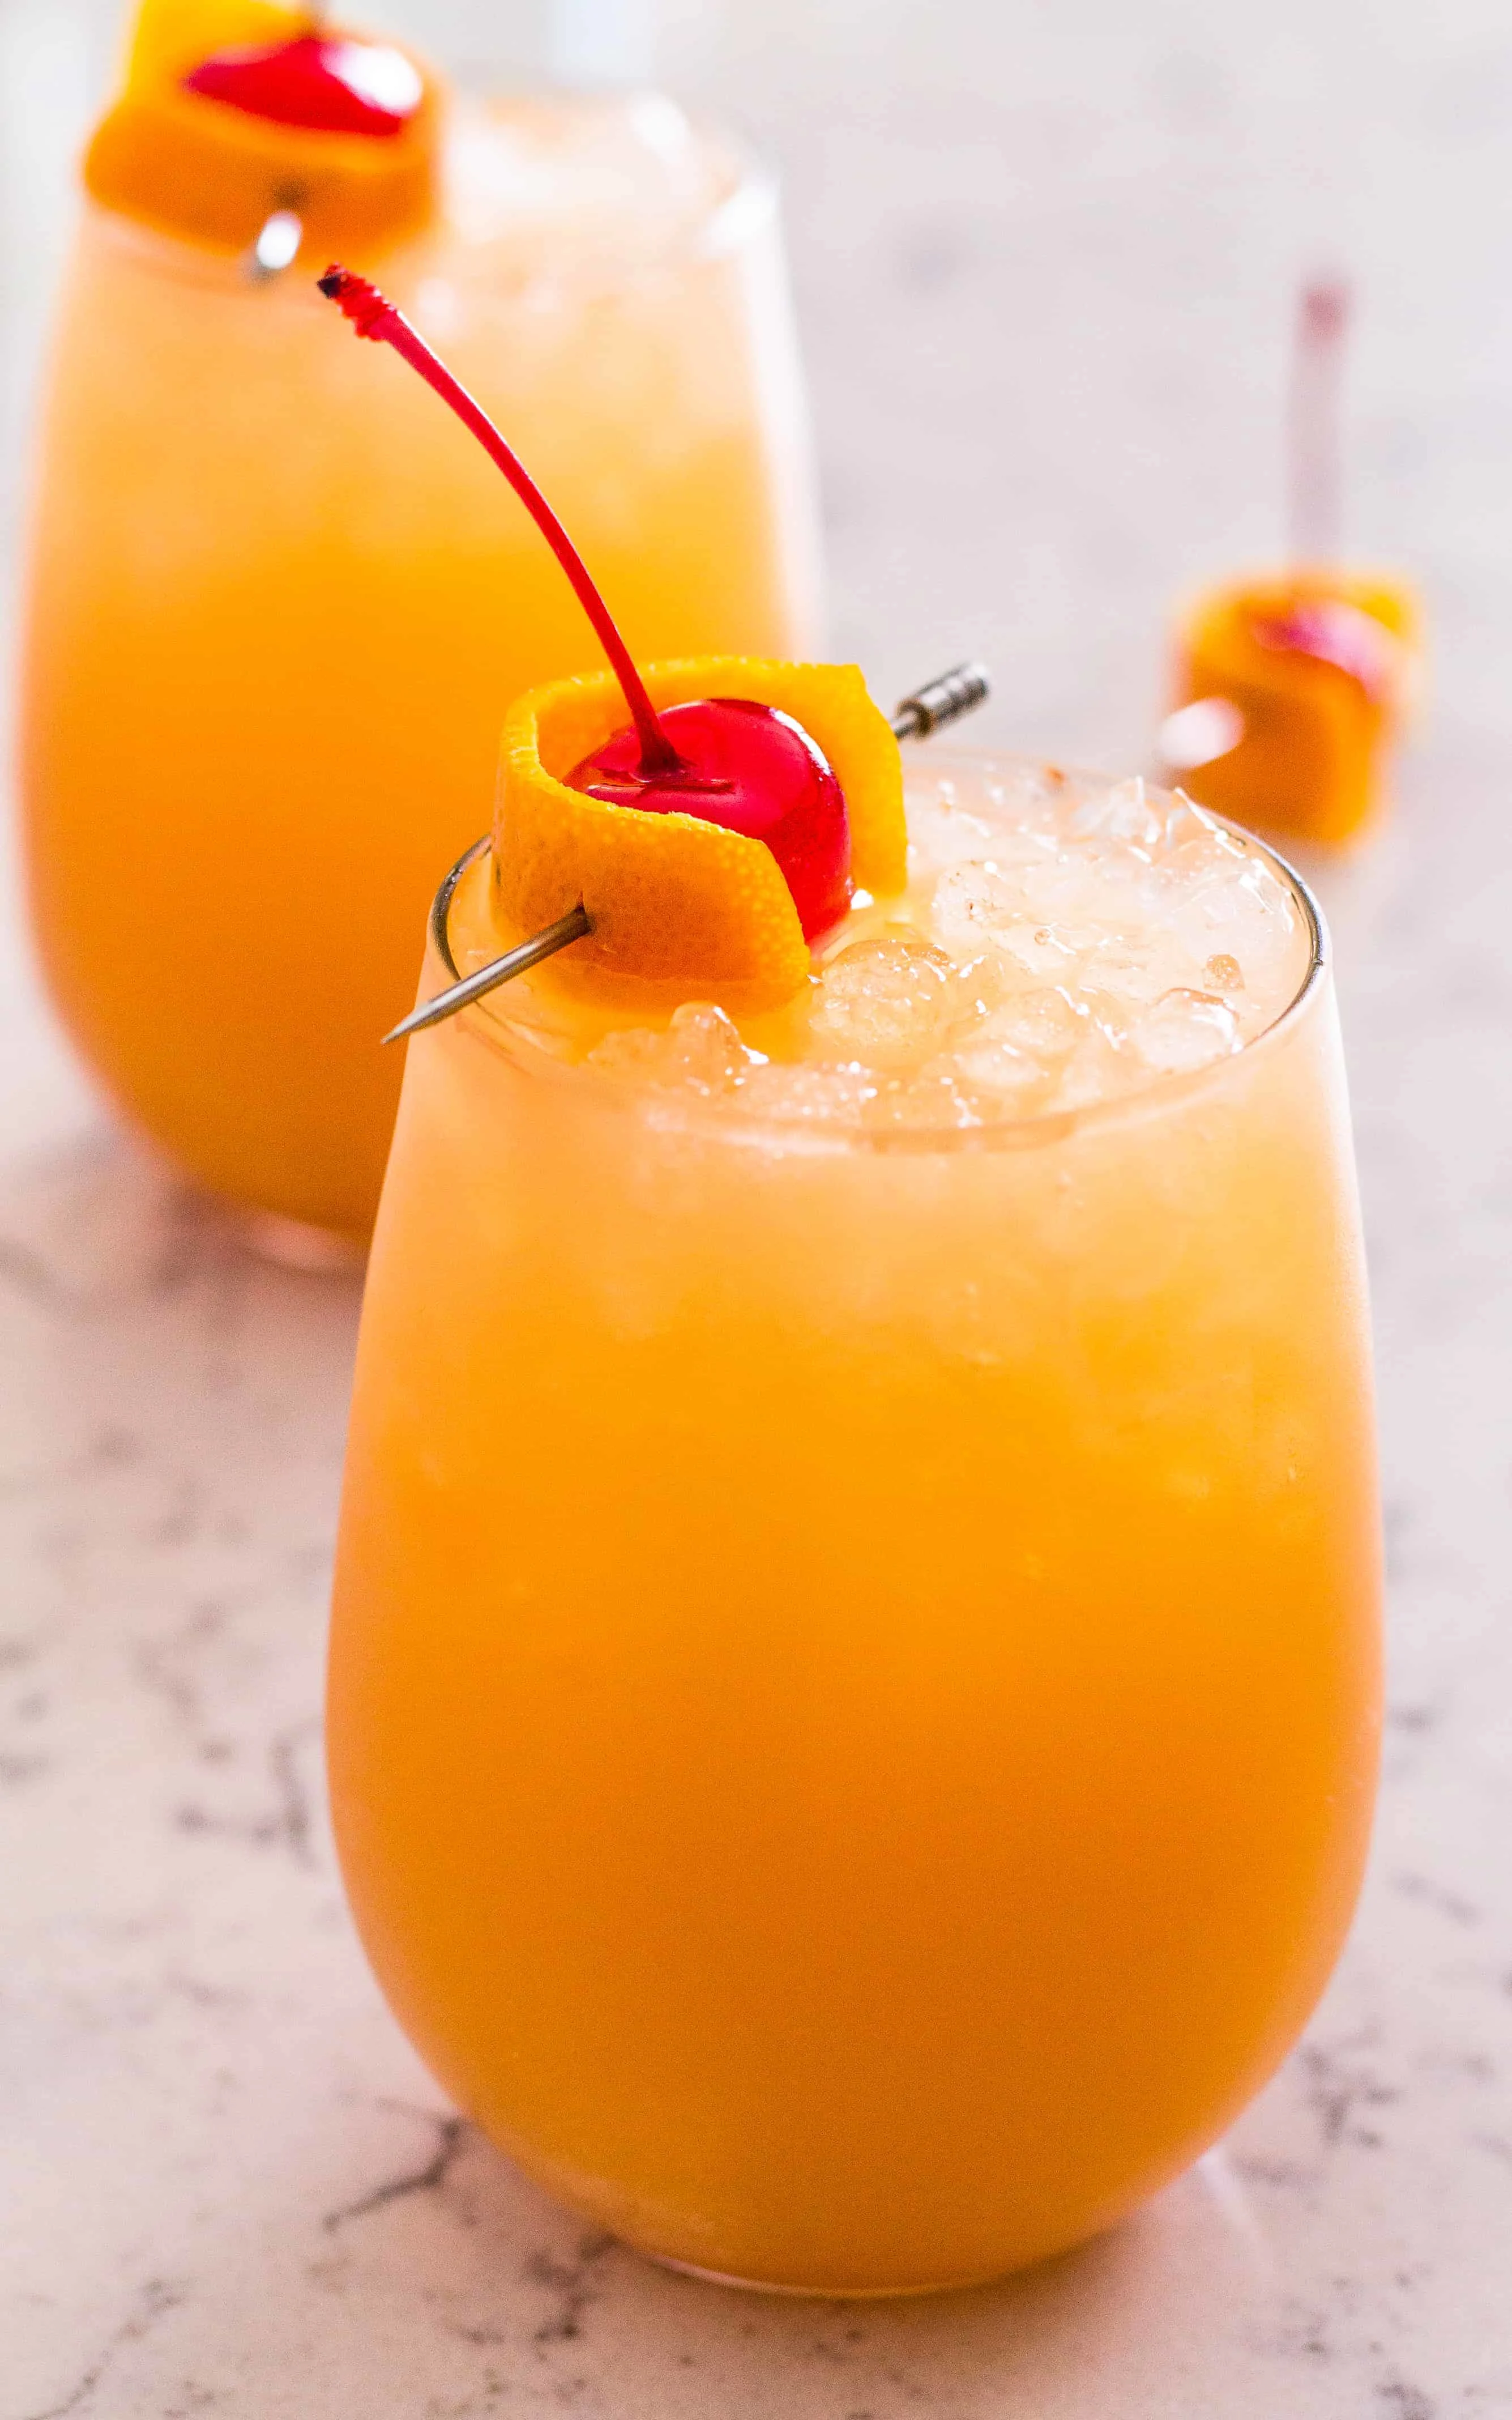 orange cocktail with cherry garnish in a wine glass